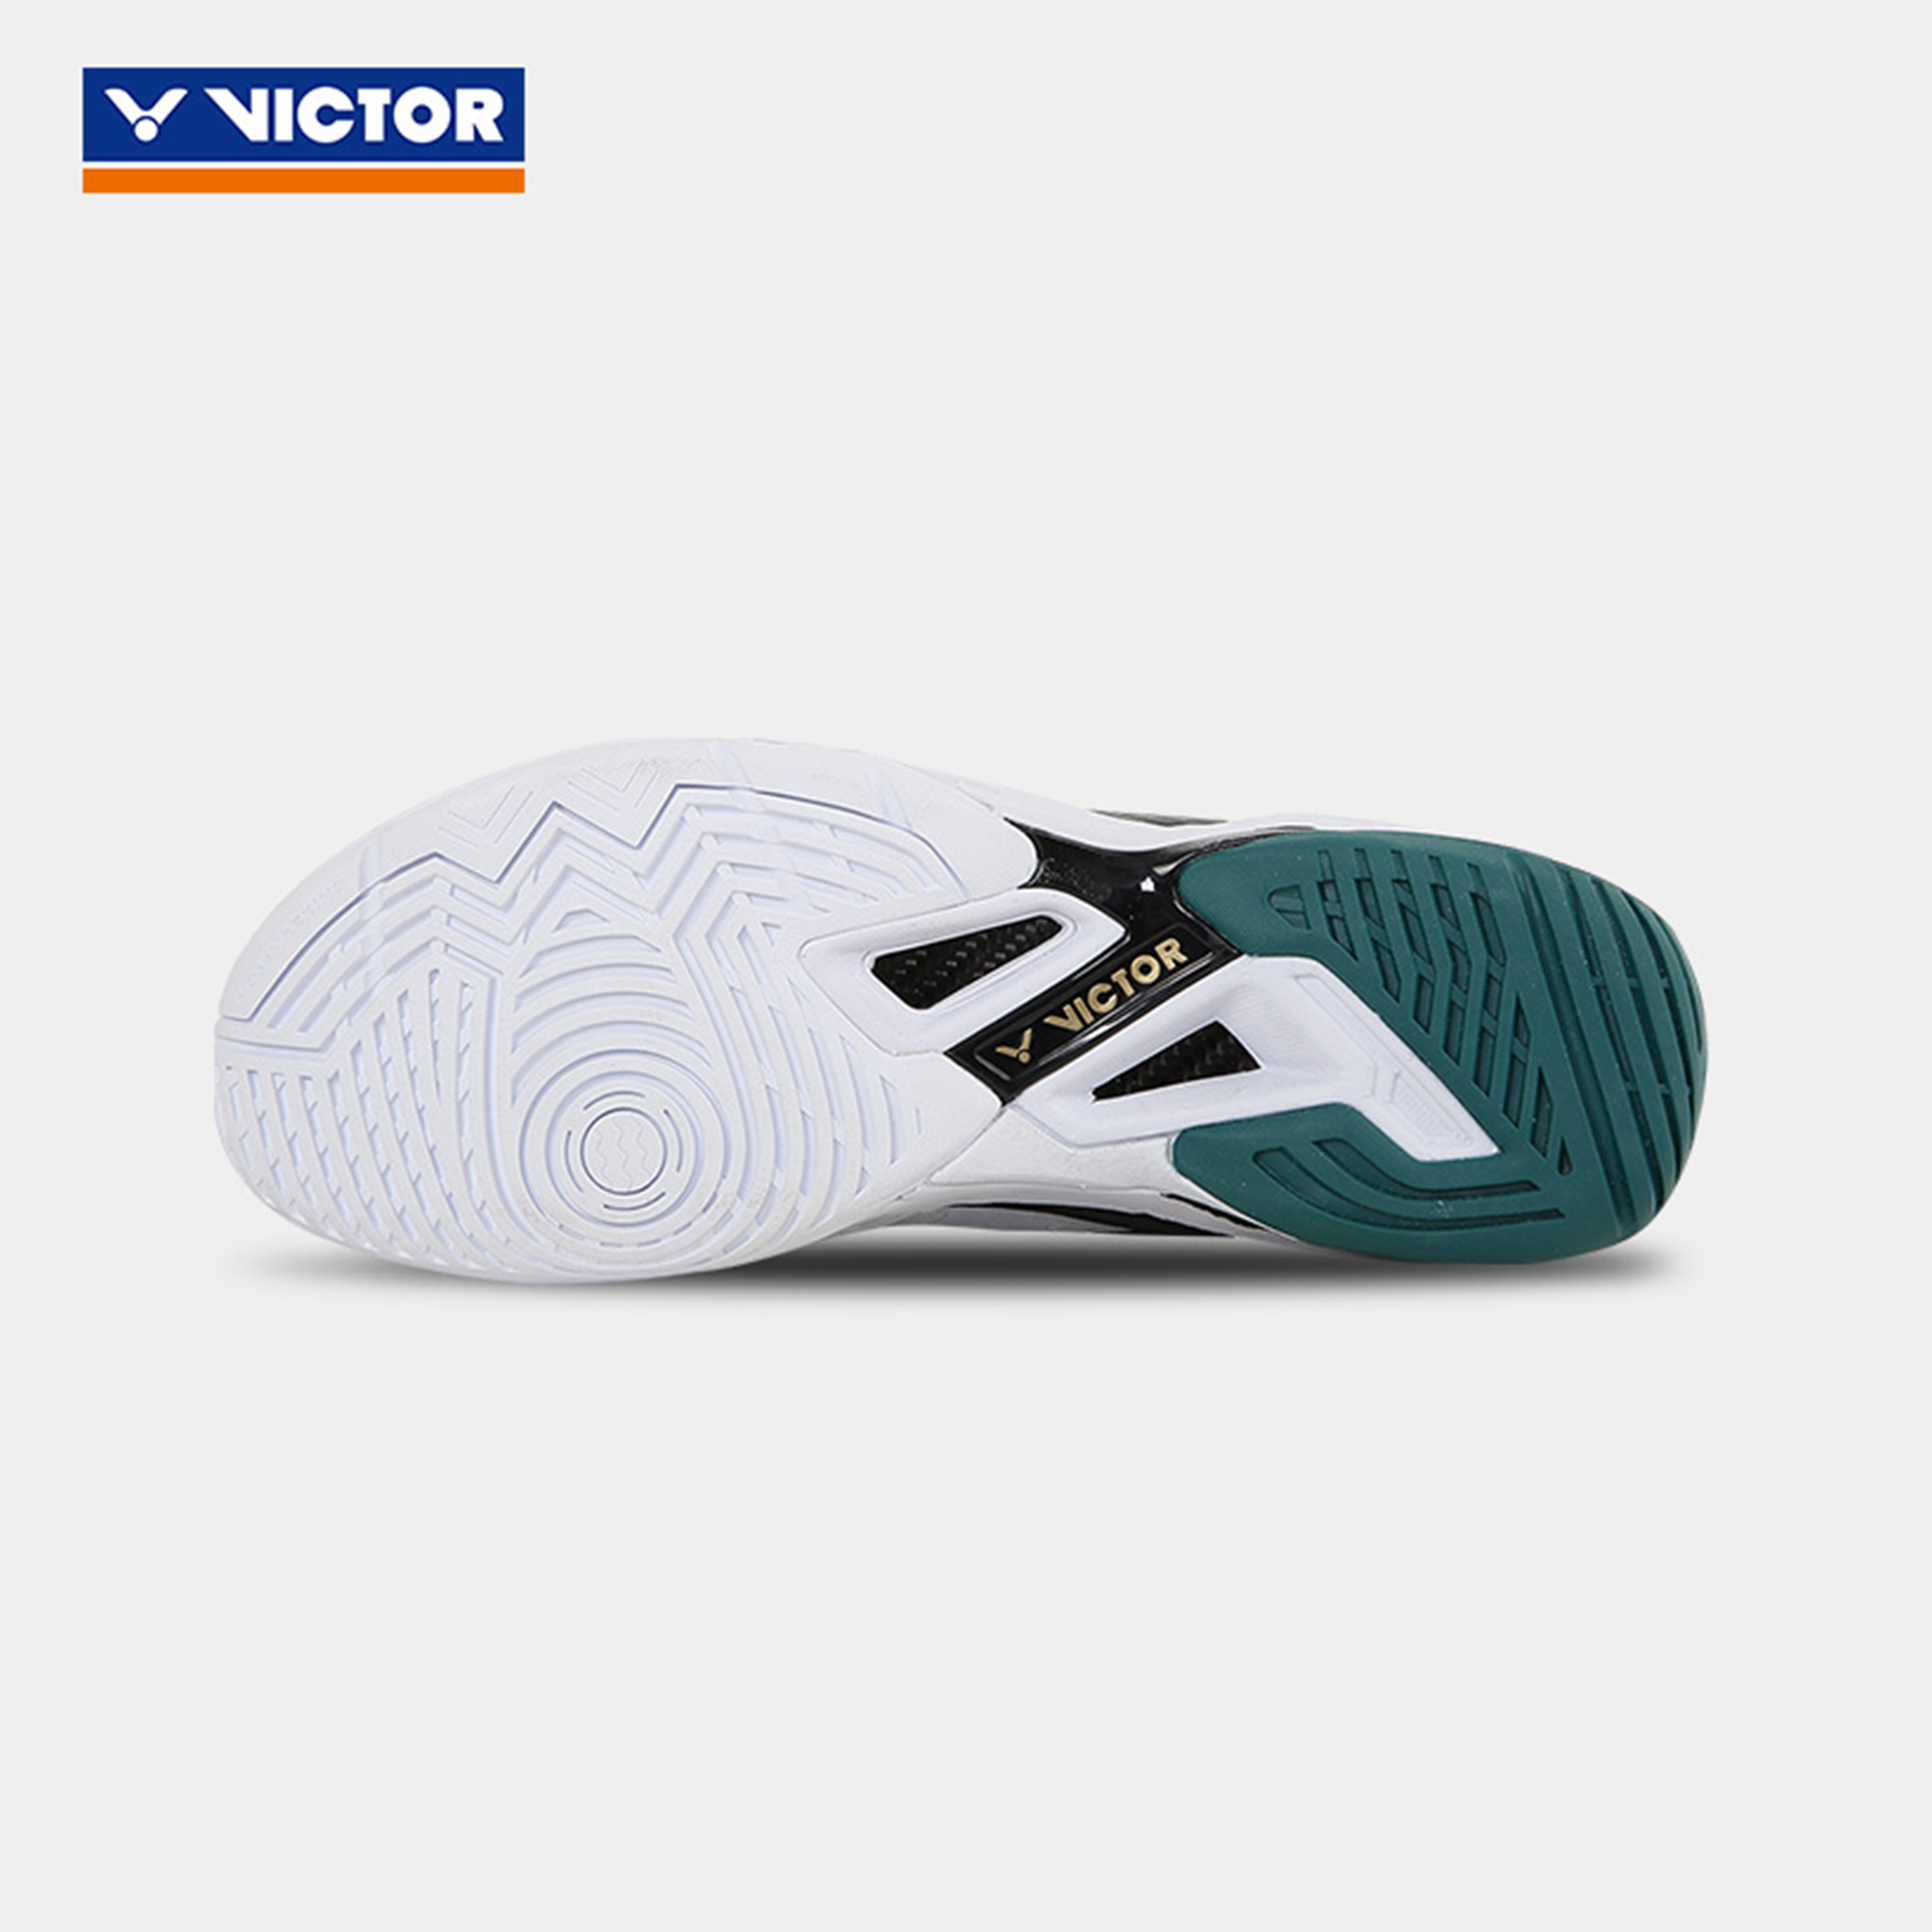 Victor P9200Hang-A Professional Badminton Shoes MEN'S